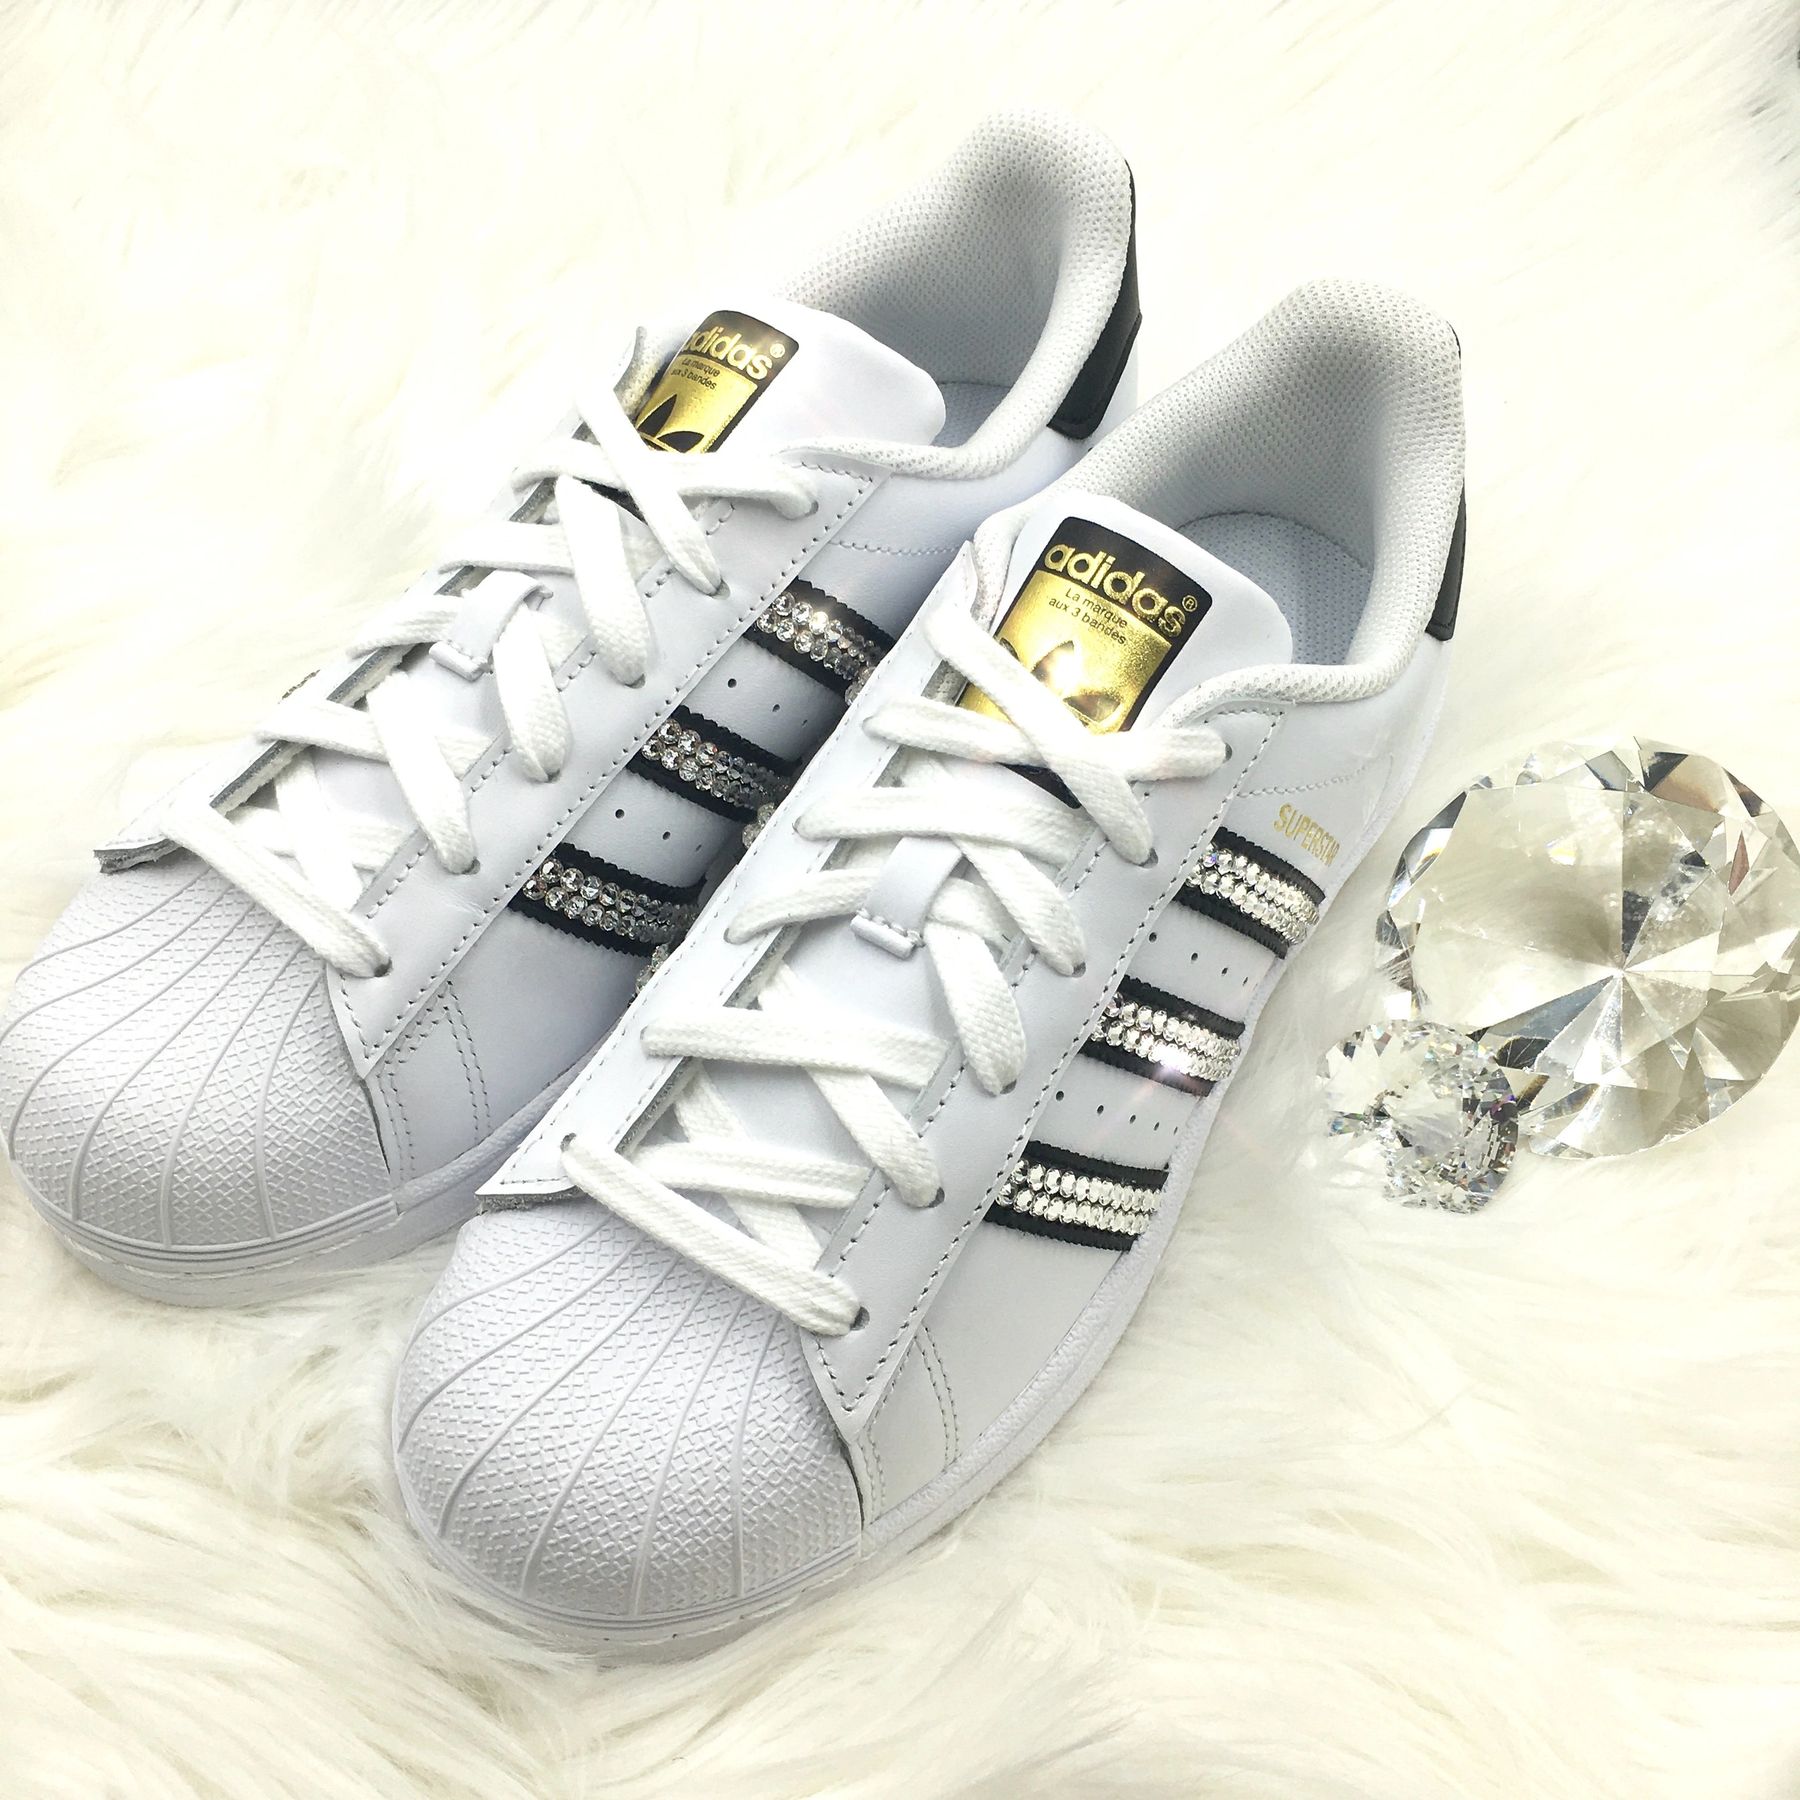 Swarovski Bling Adidas Superstar Shoes -White & Black